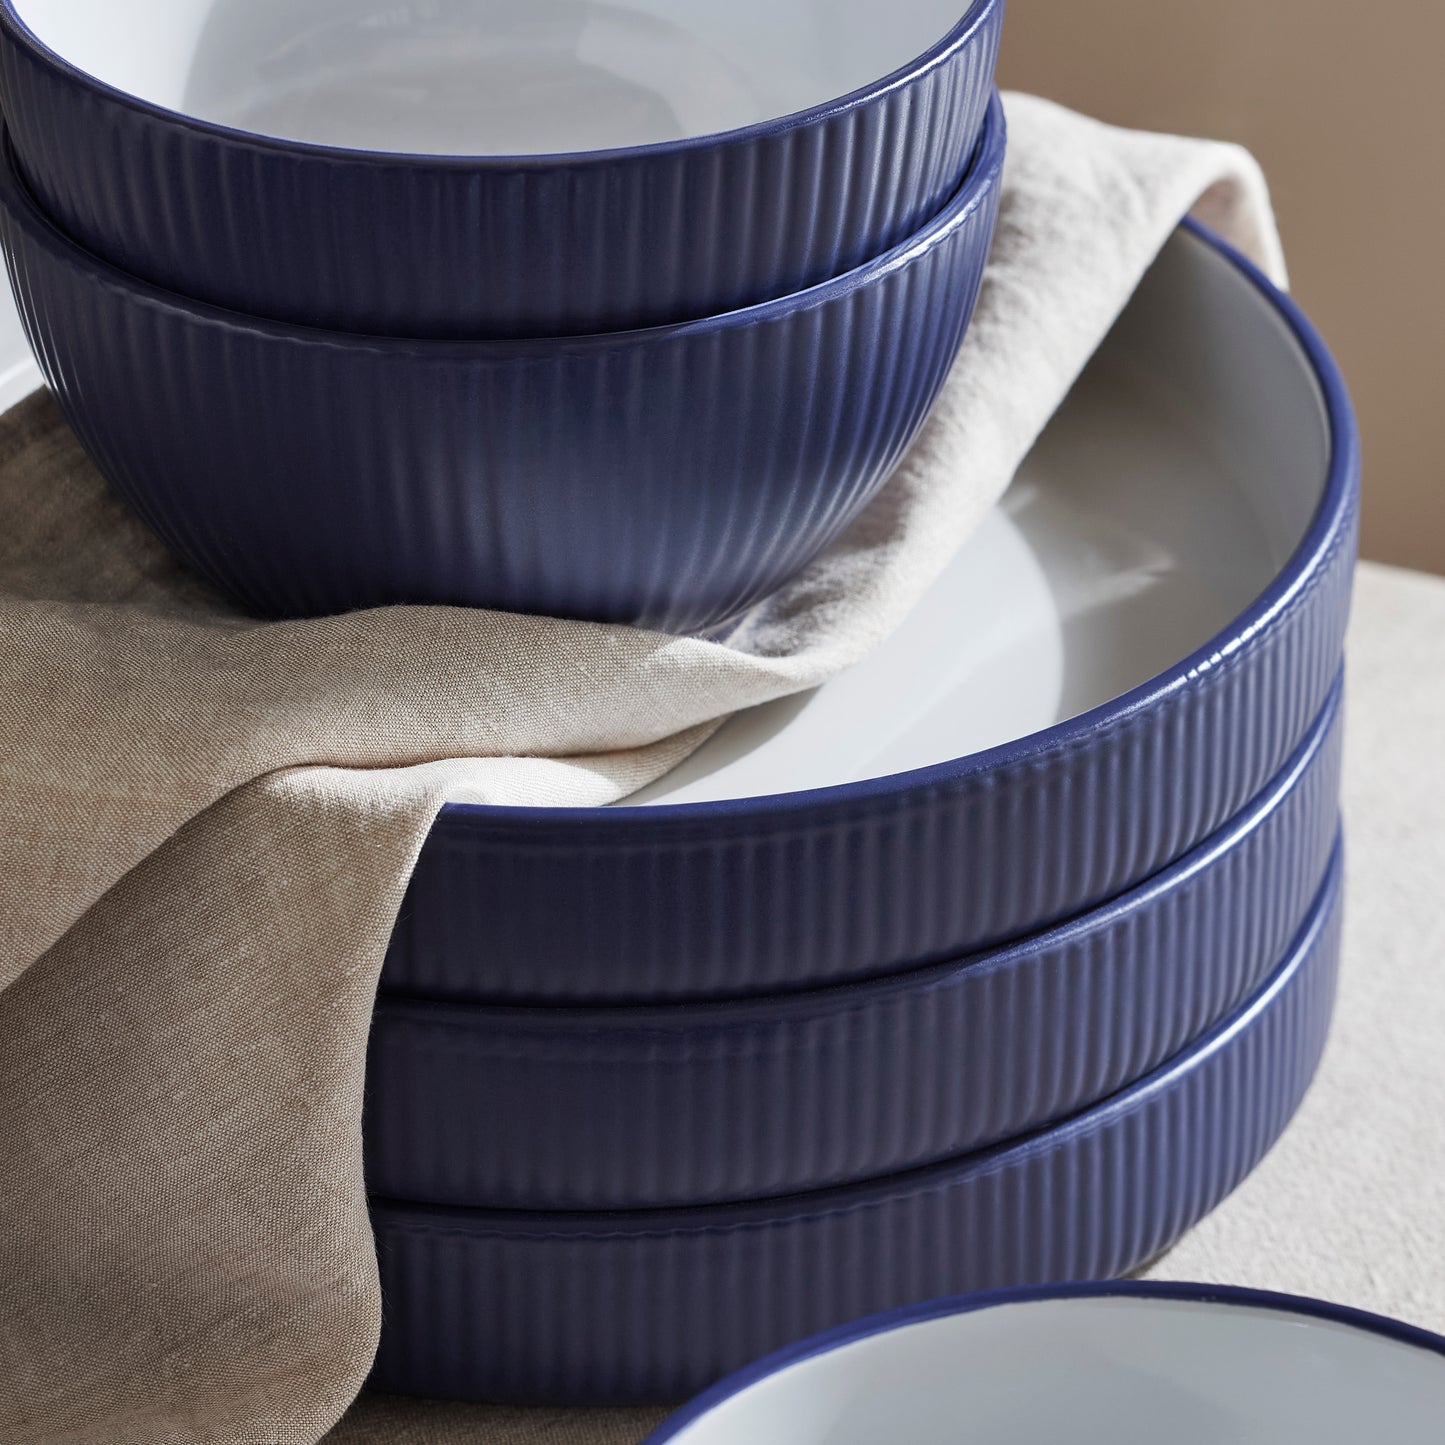 Larosso Stoneware Dinnerware Set - Dark Blue/White